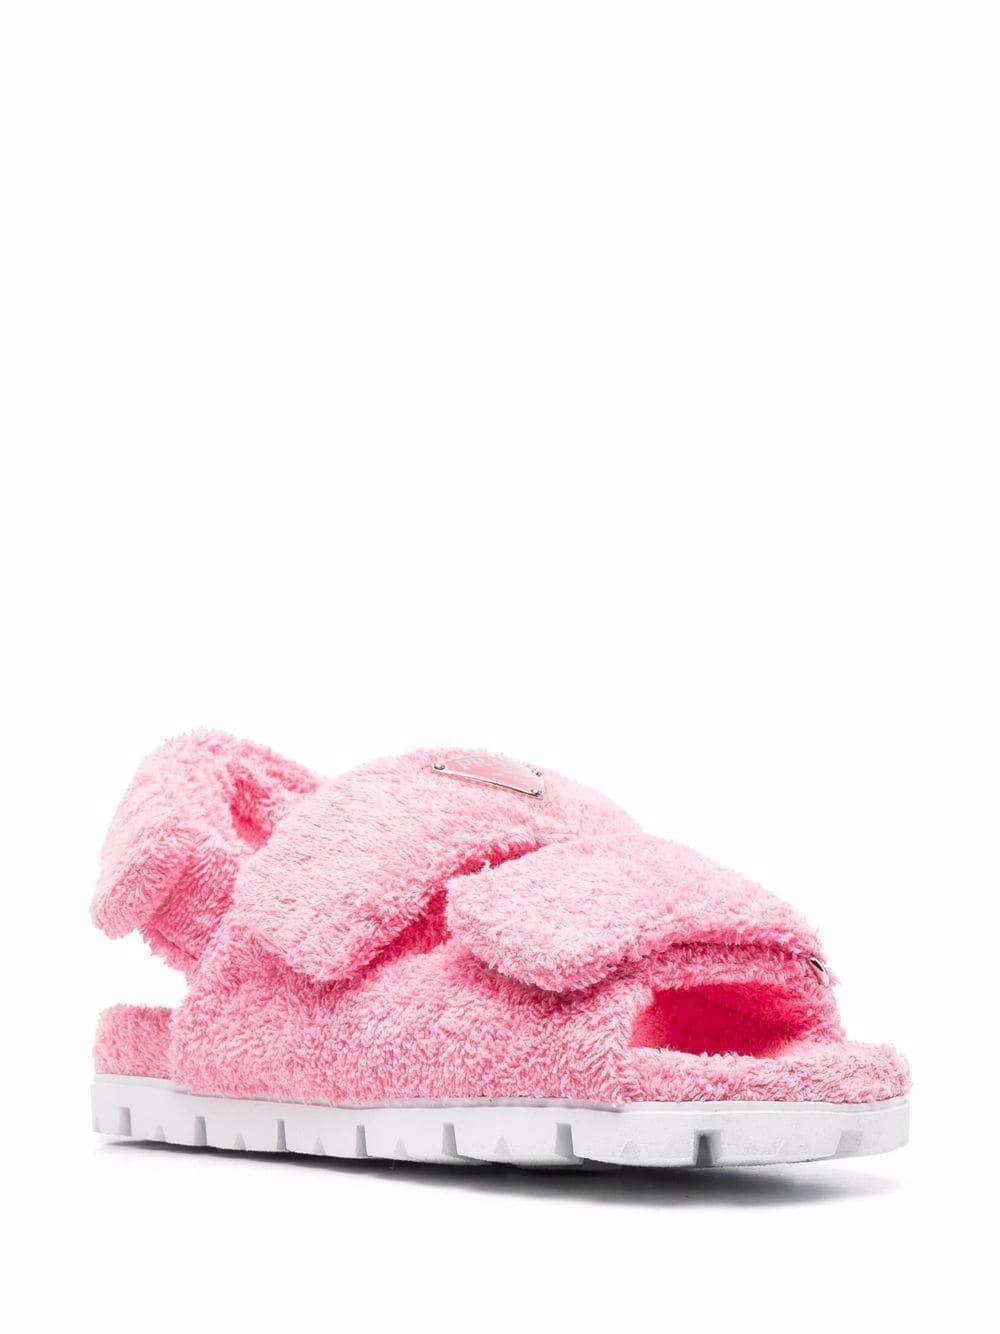 Prada Triangle Logo Shearling Sandals in Pink | Lyst Australia